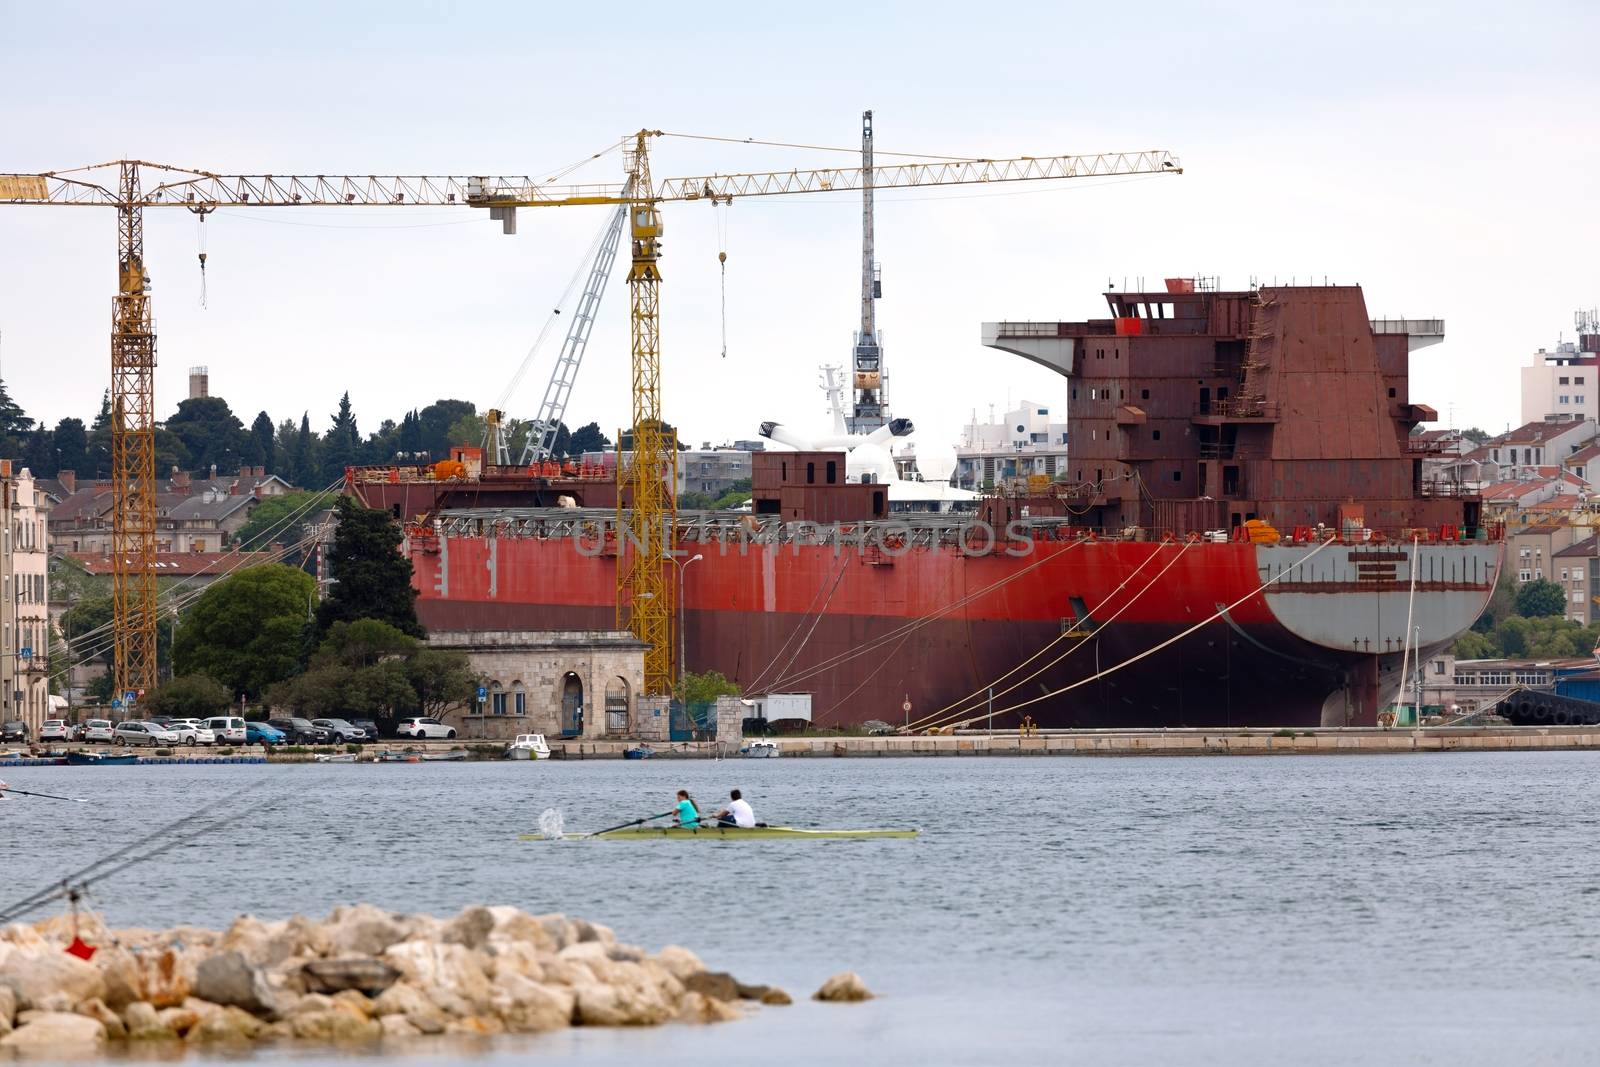 Large shipyard near the coast in Croatia